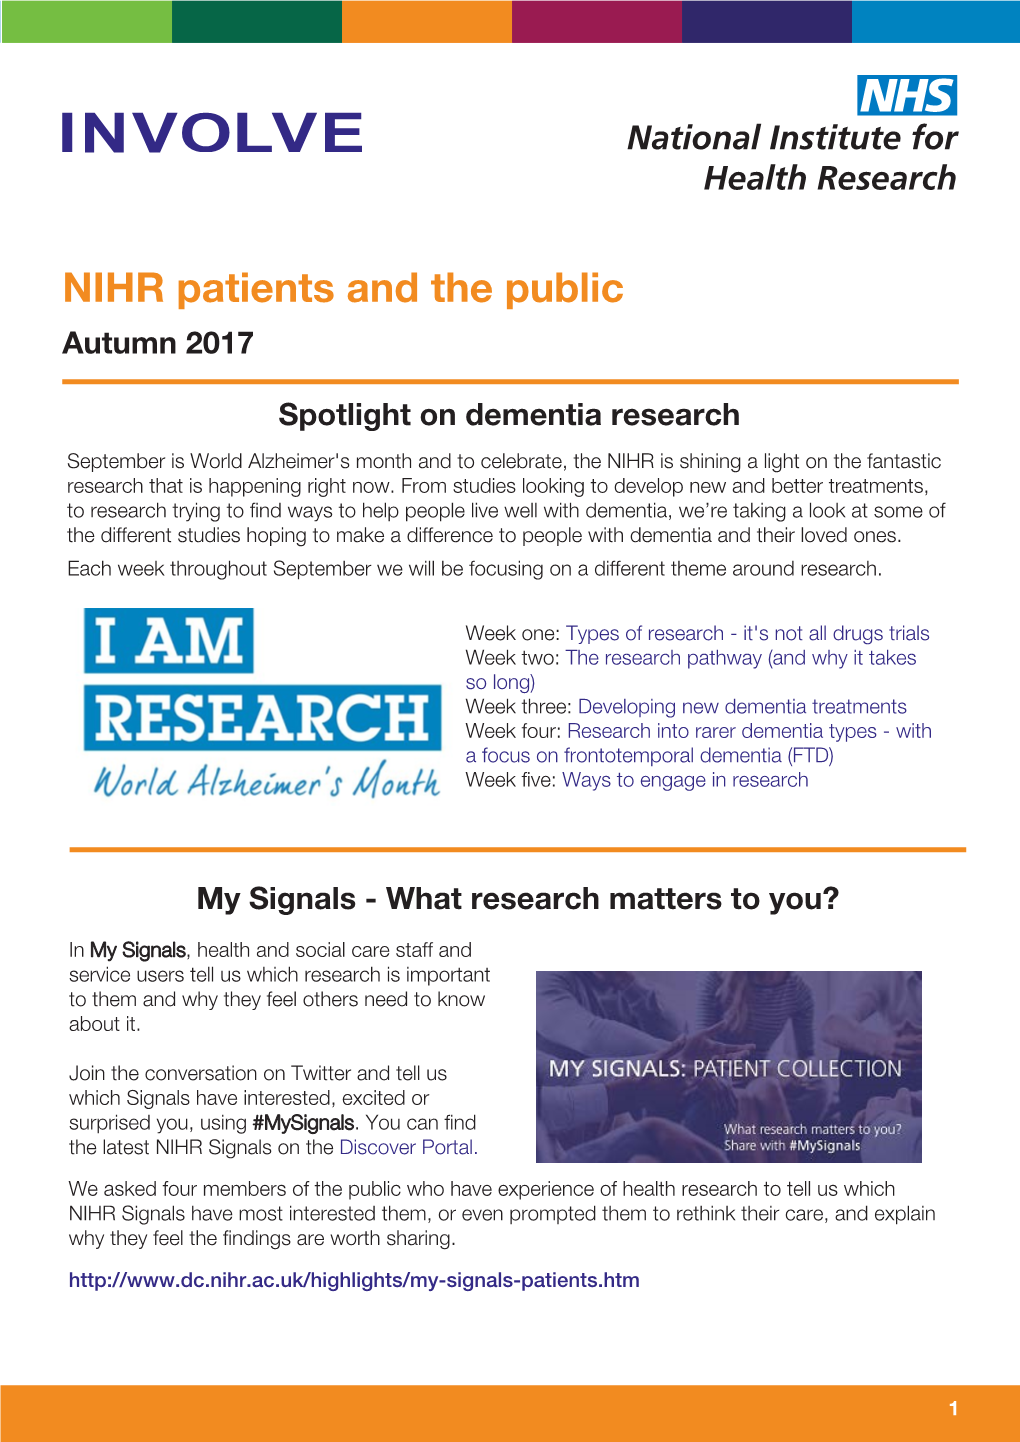 NIHR Patients and the Public Autumn 2017